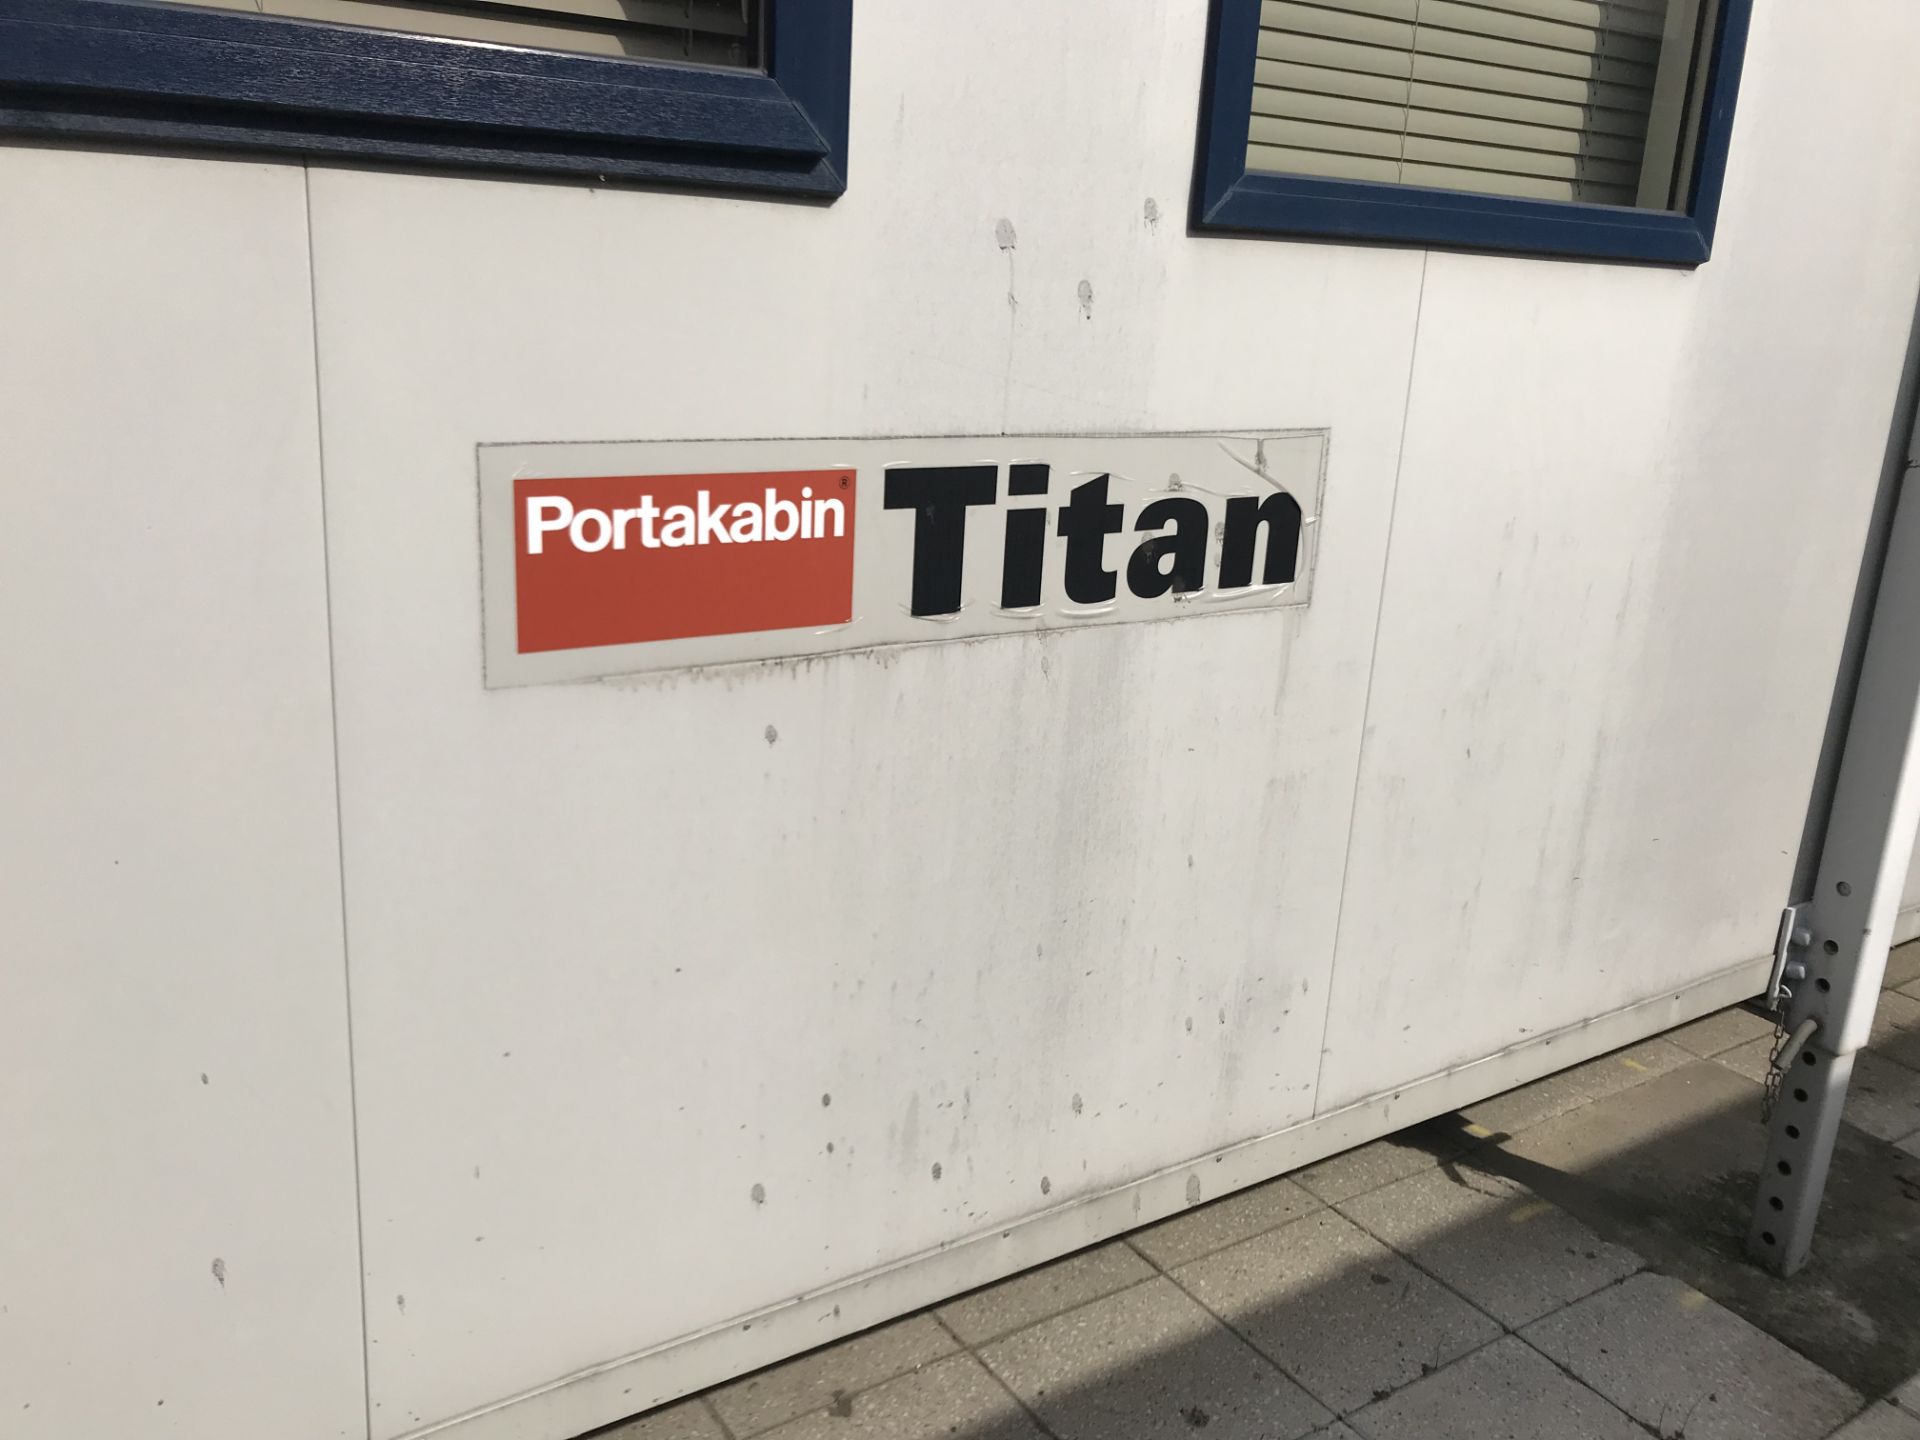 Portakabin Titan - Image 15 of 40